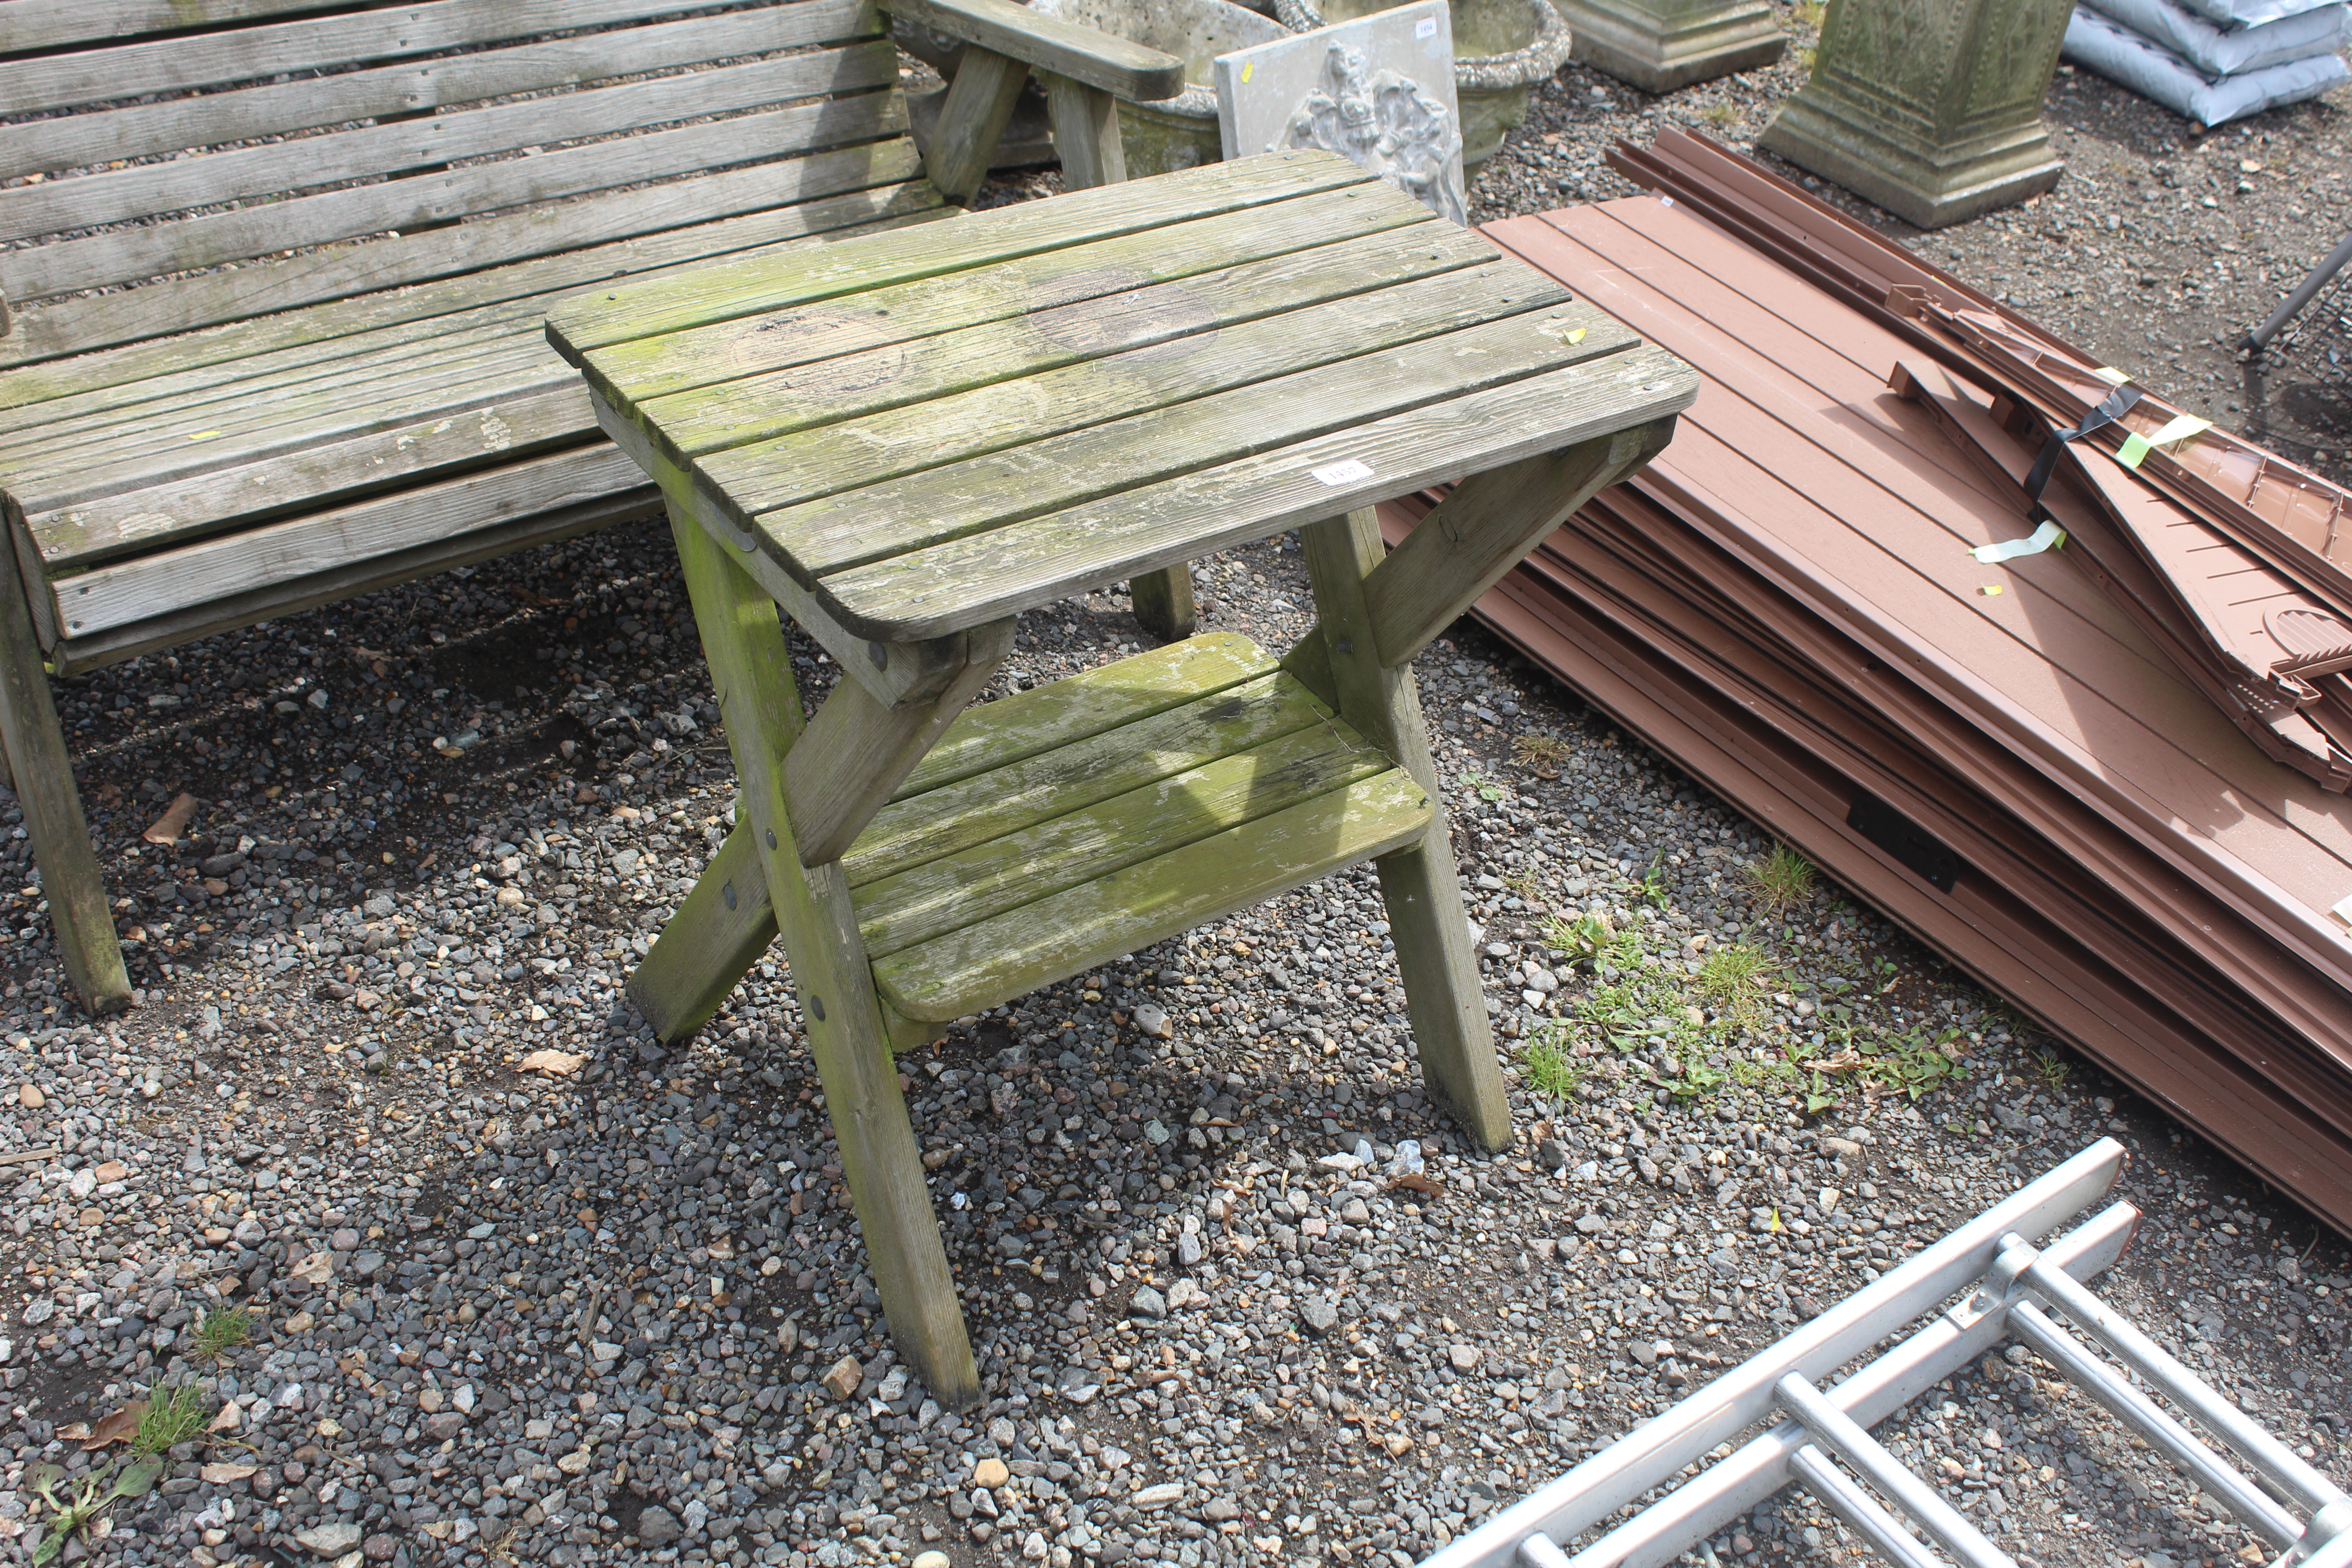 A wooden garden table fitted shelf below